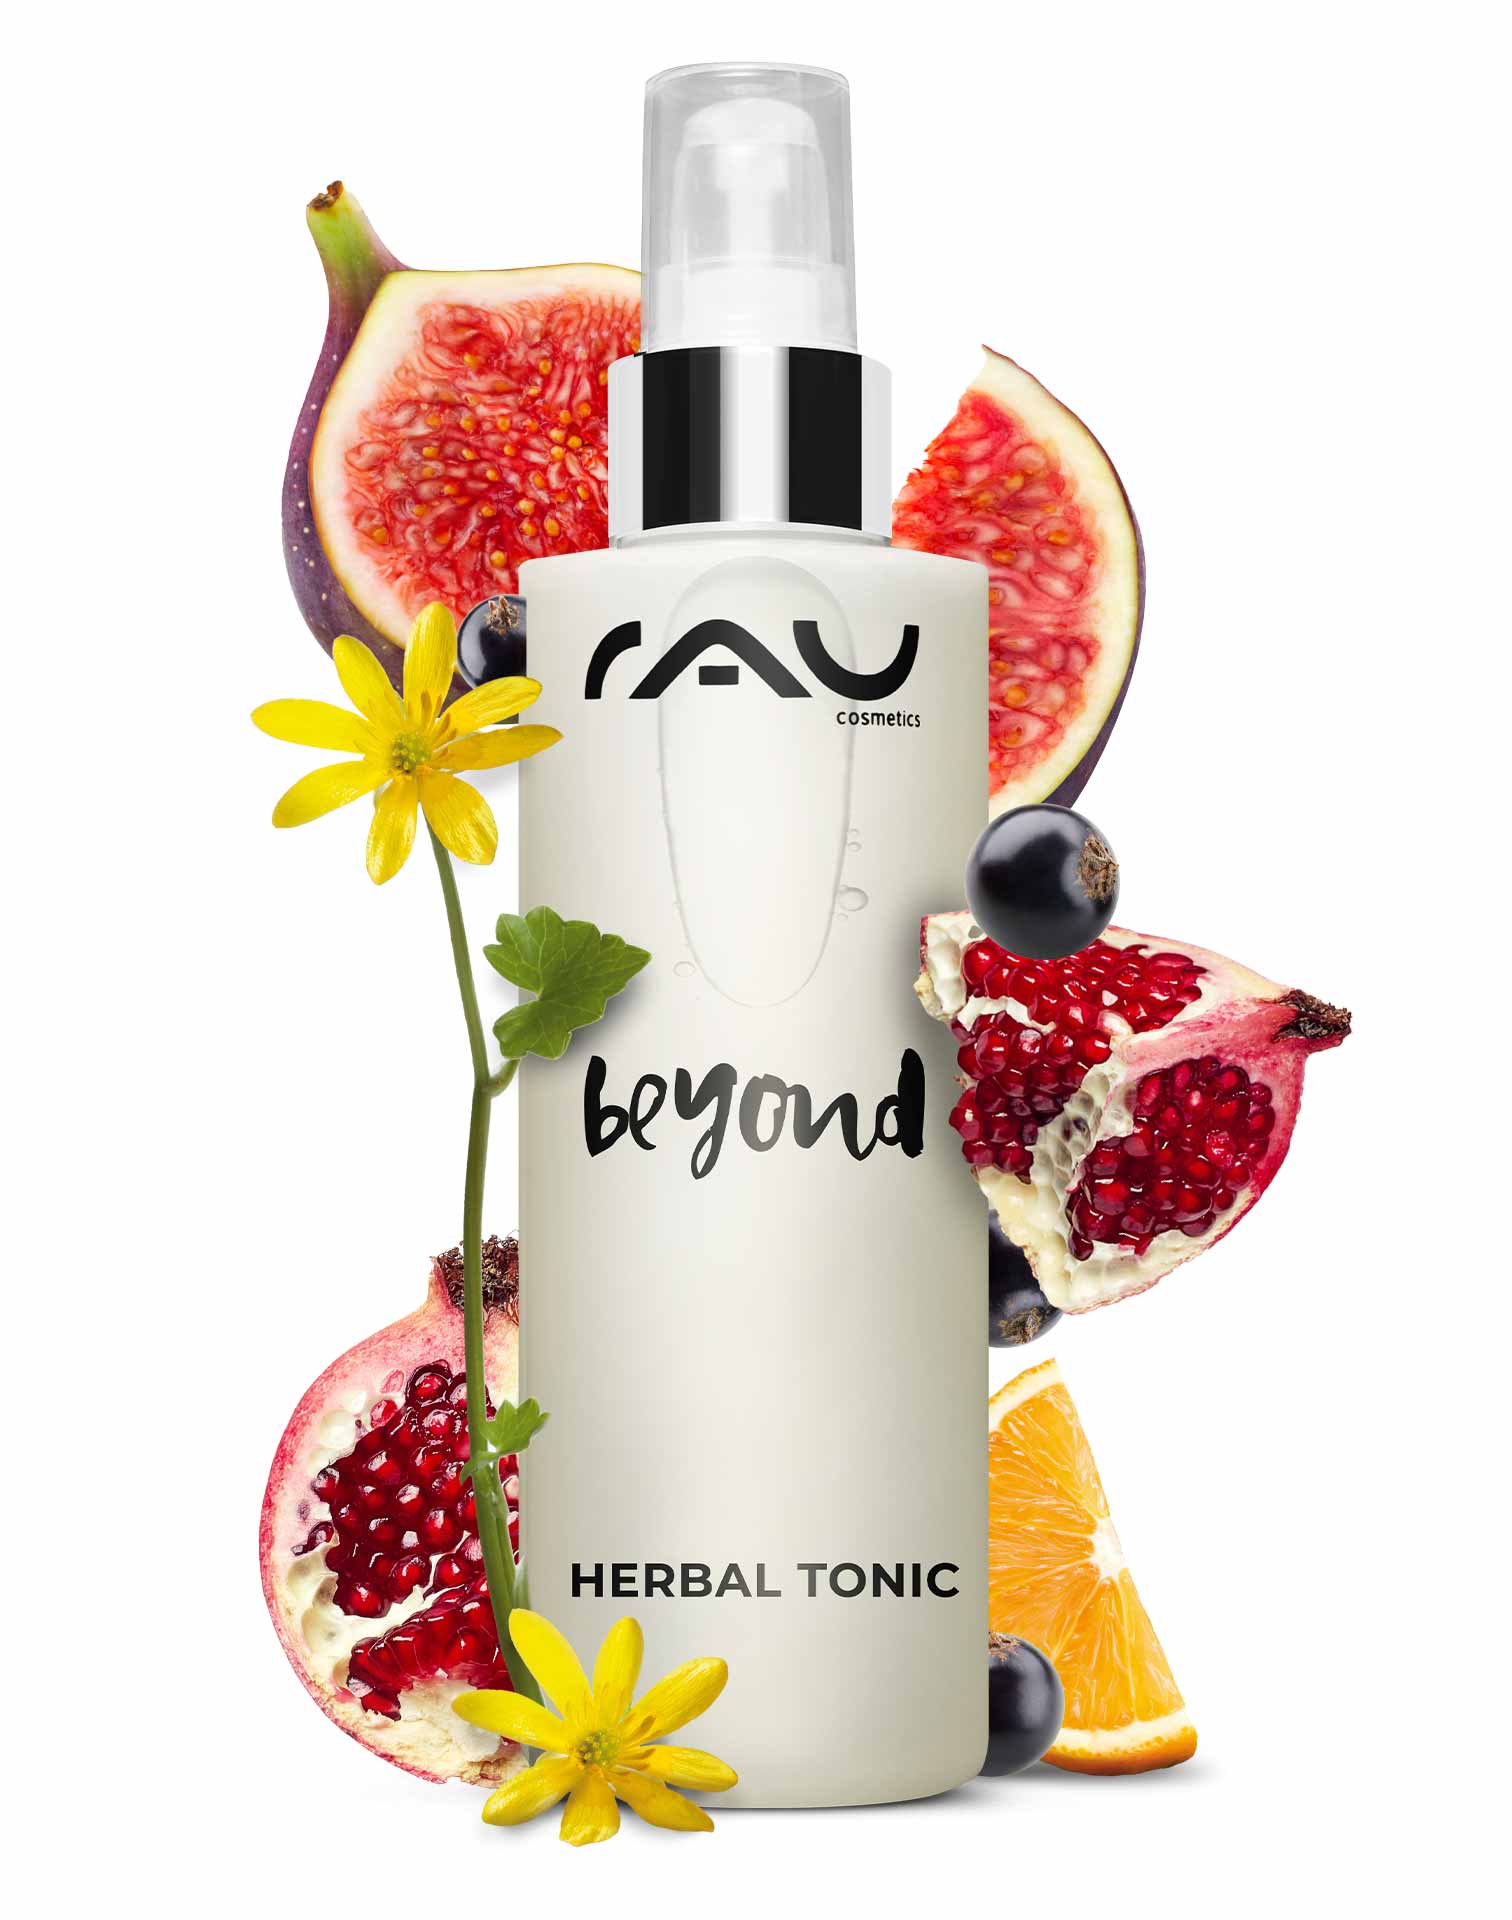 Beyond Herbal Tonic 200 ml natural cosmetics toner